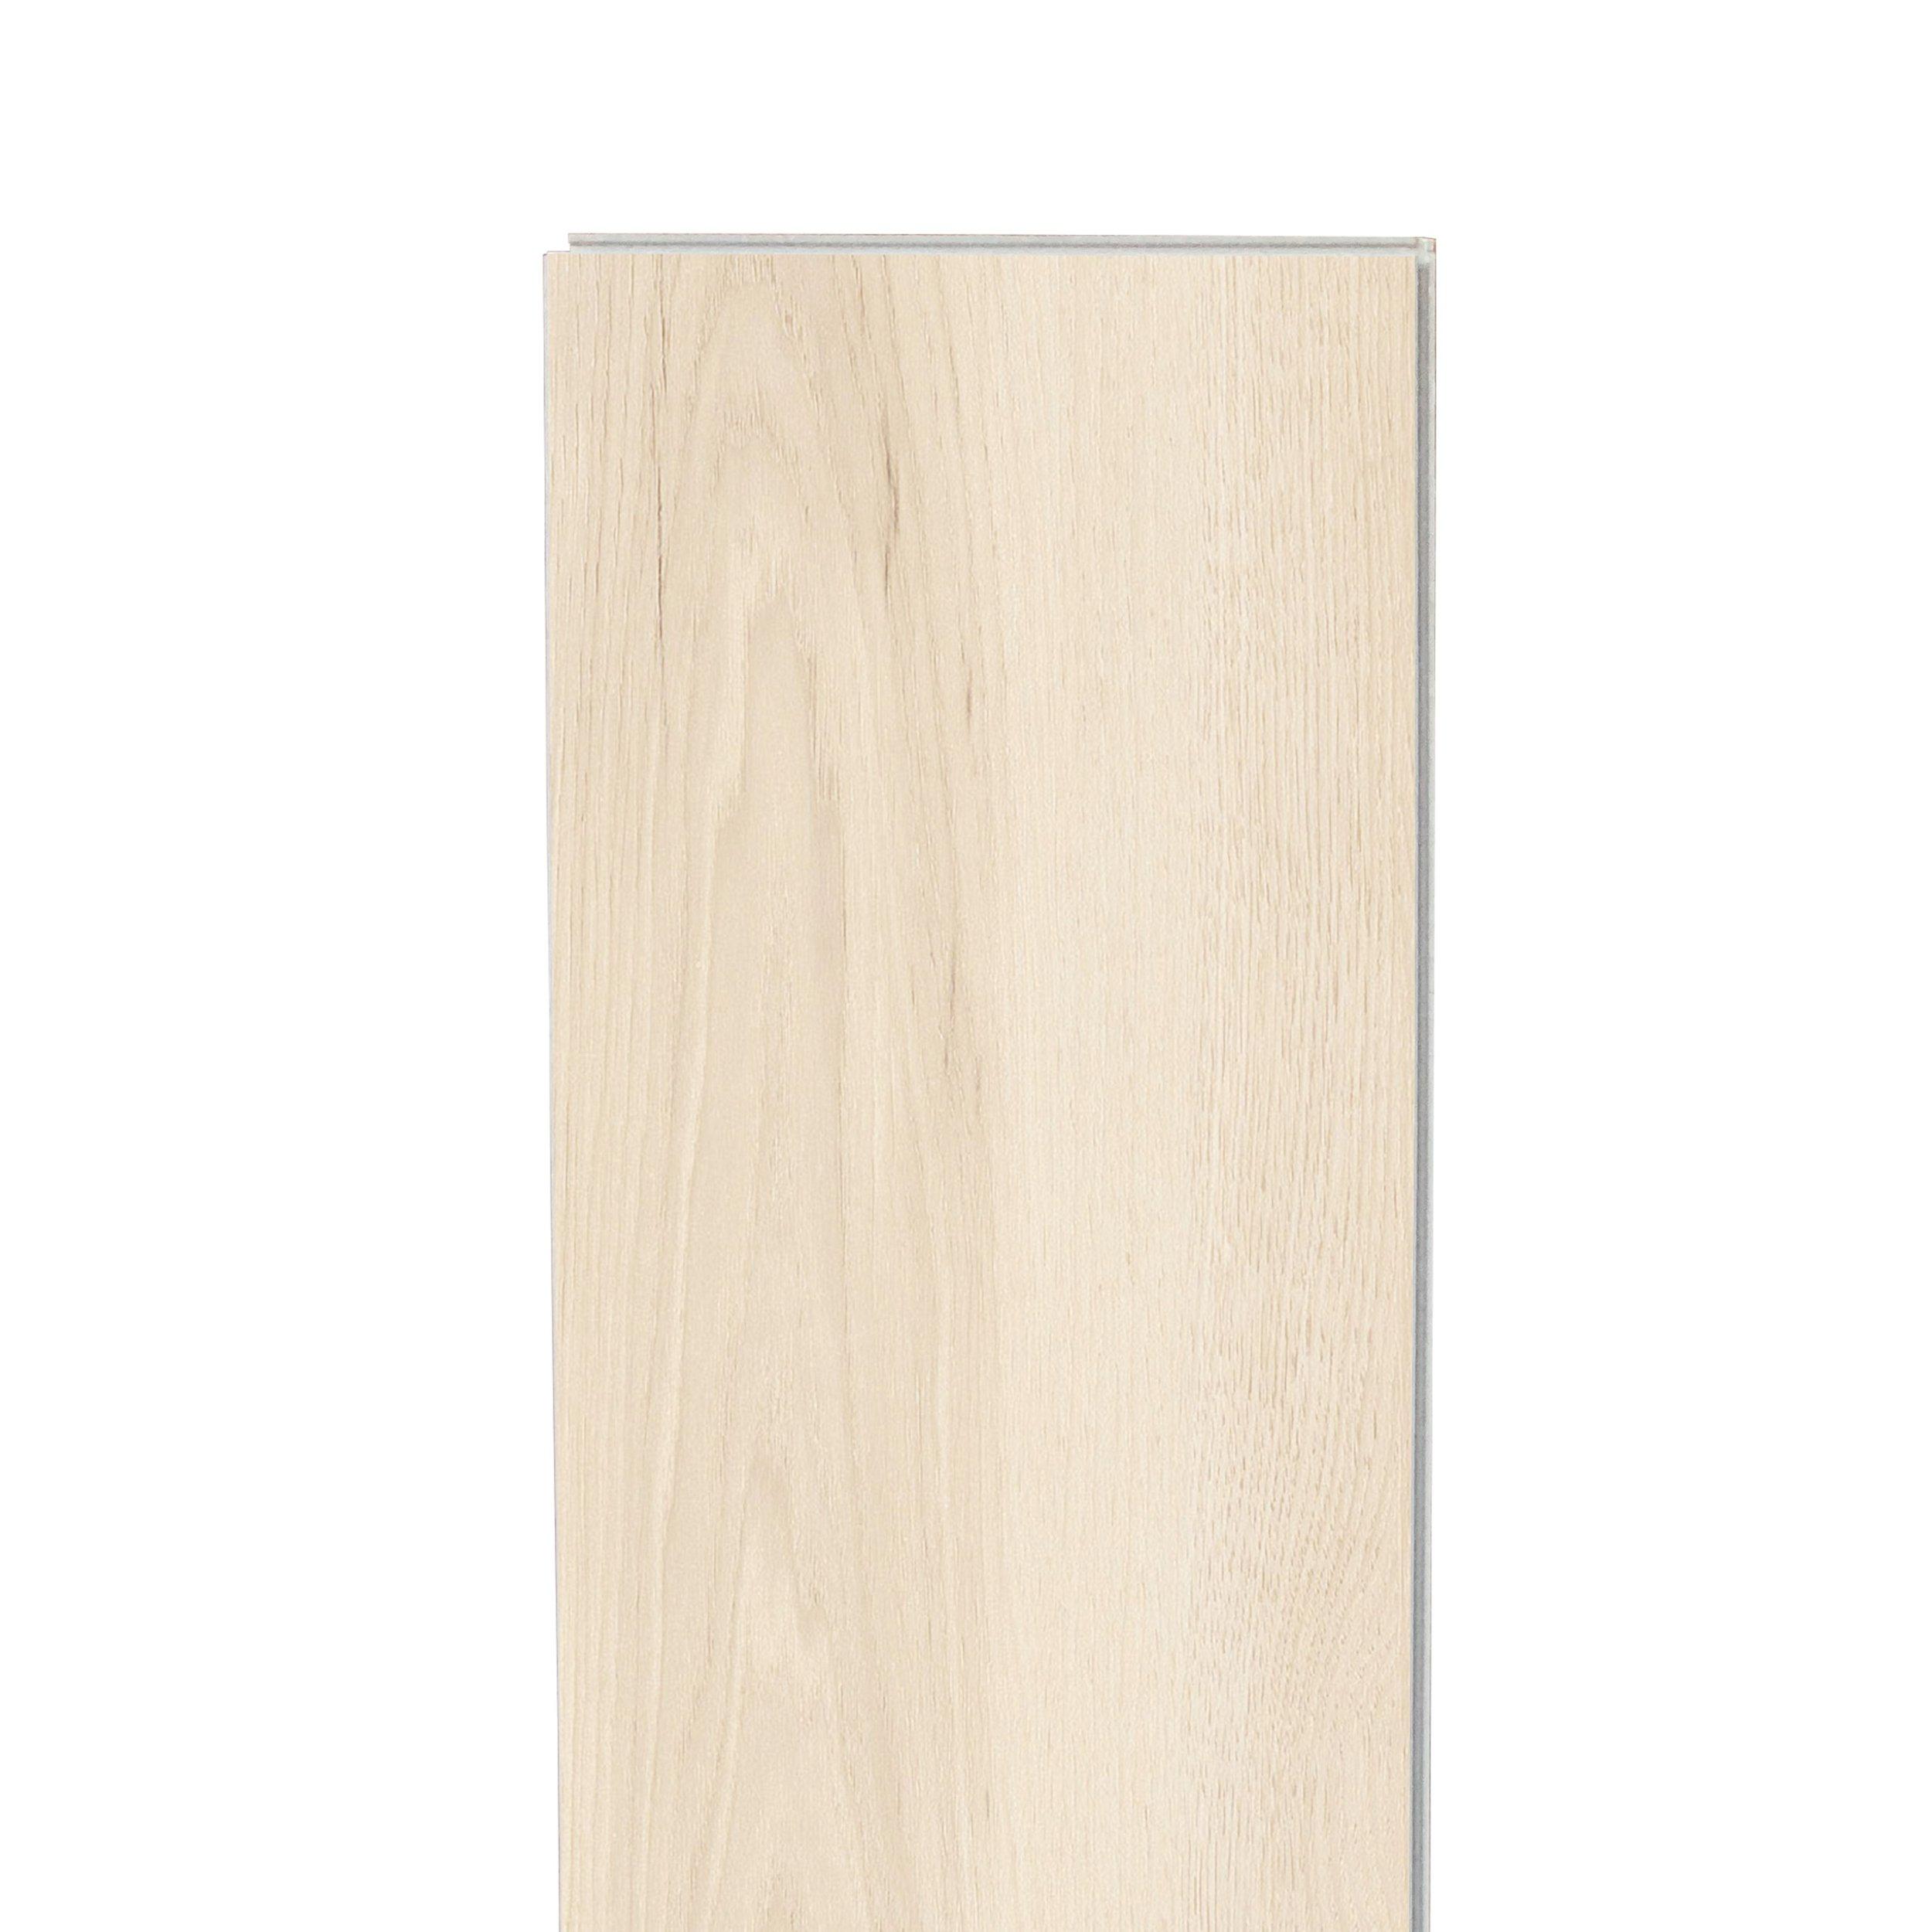 Desert Tundra Rigid Core Luxury Vinyl Plank - Cork Back